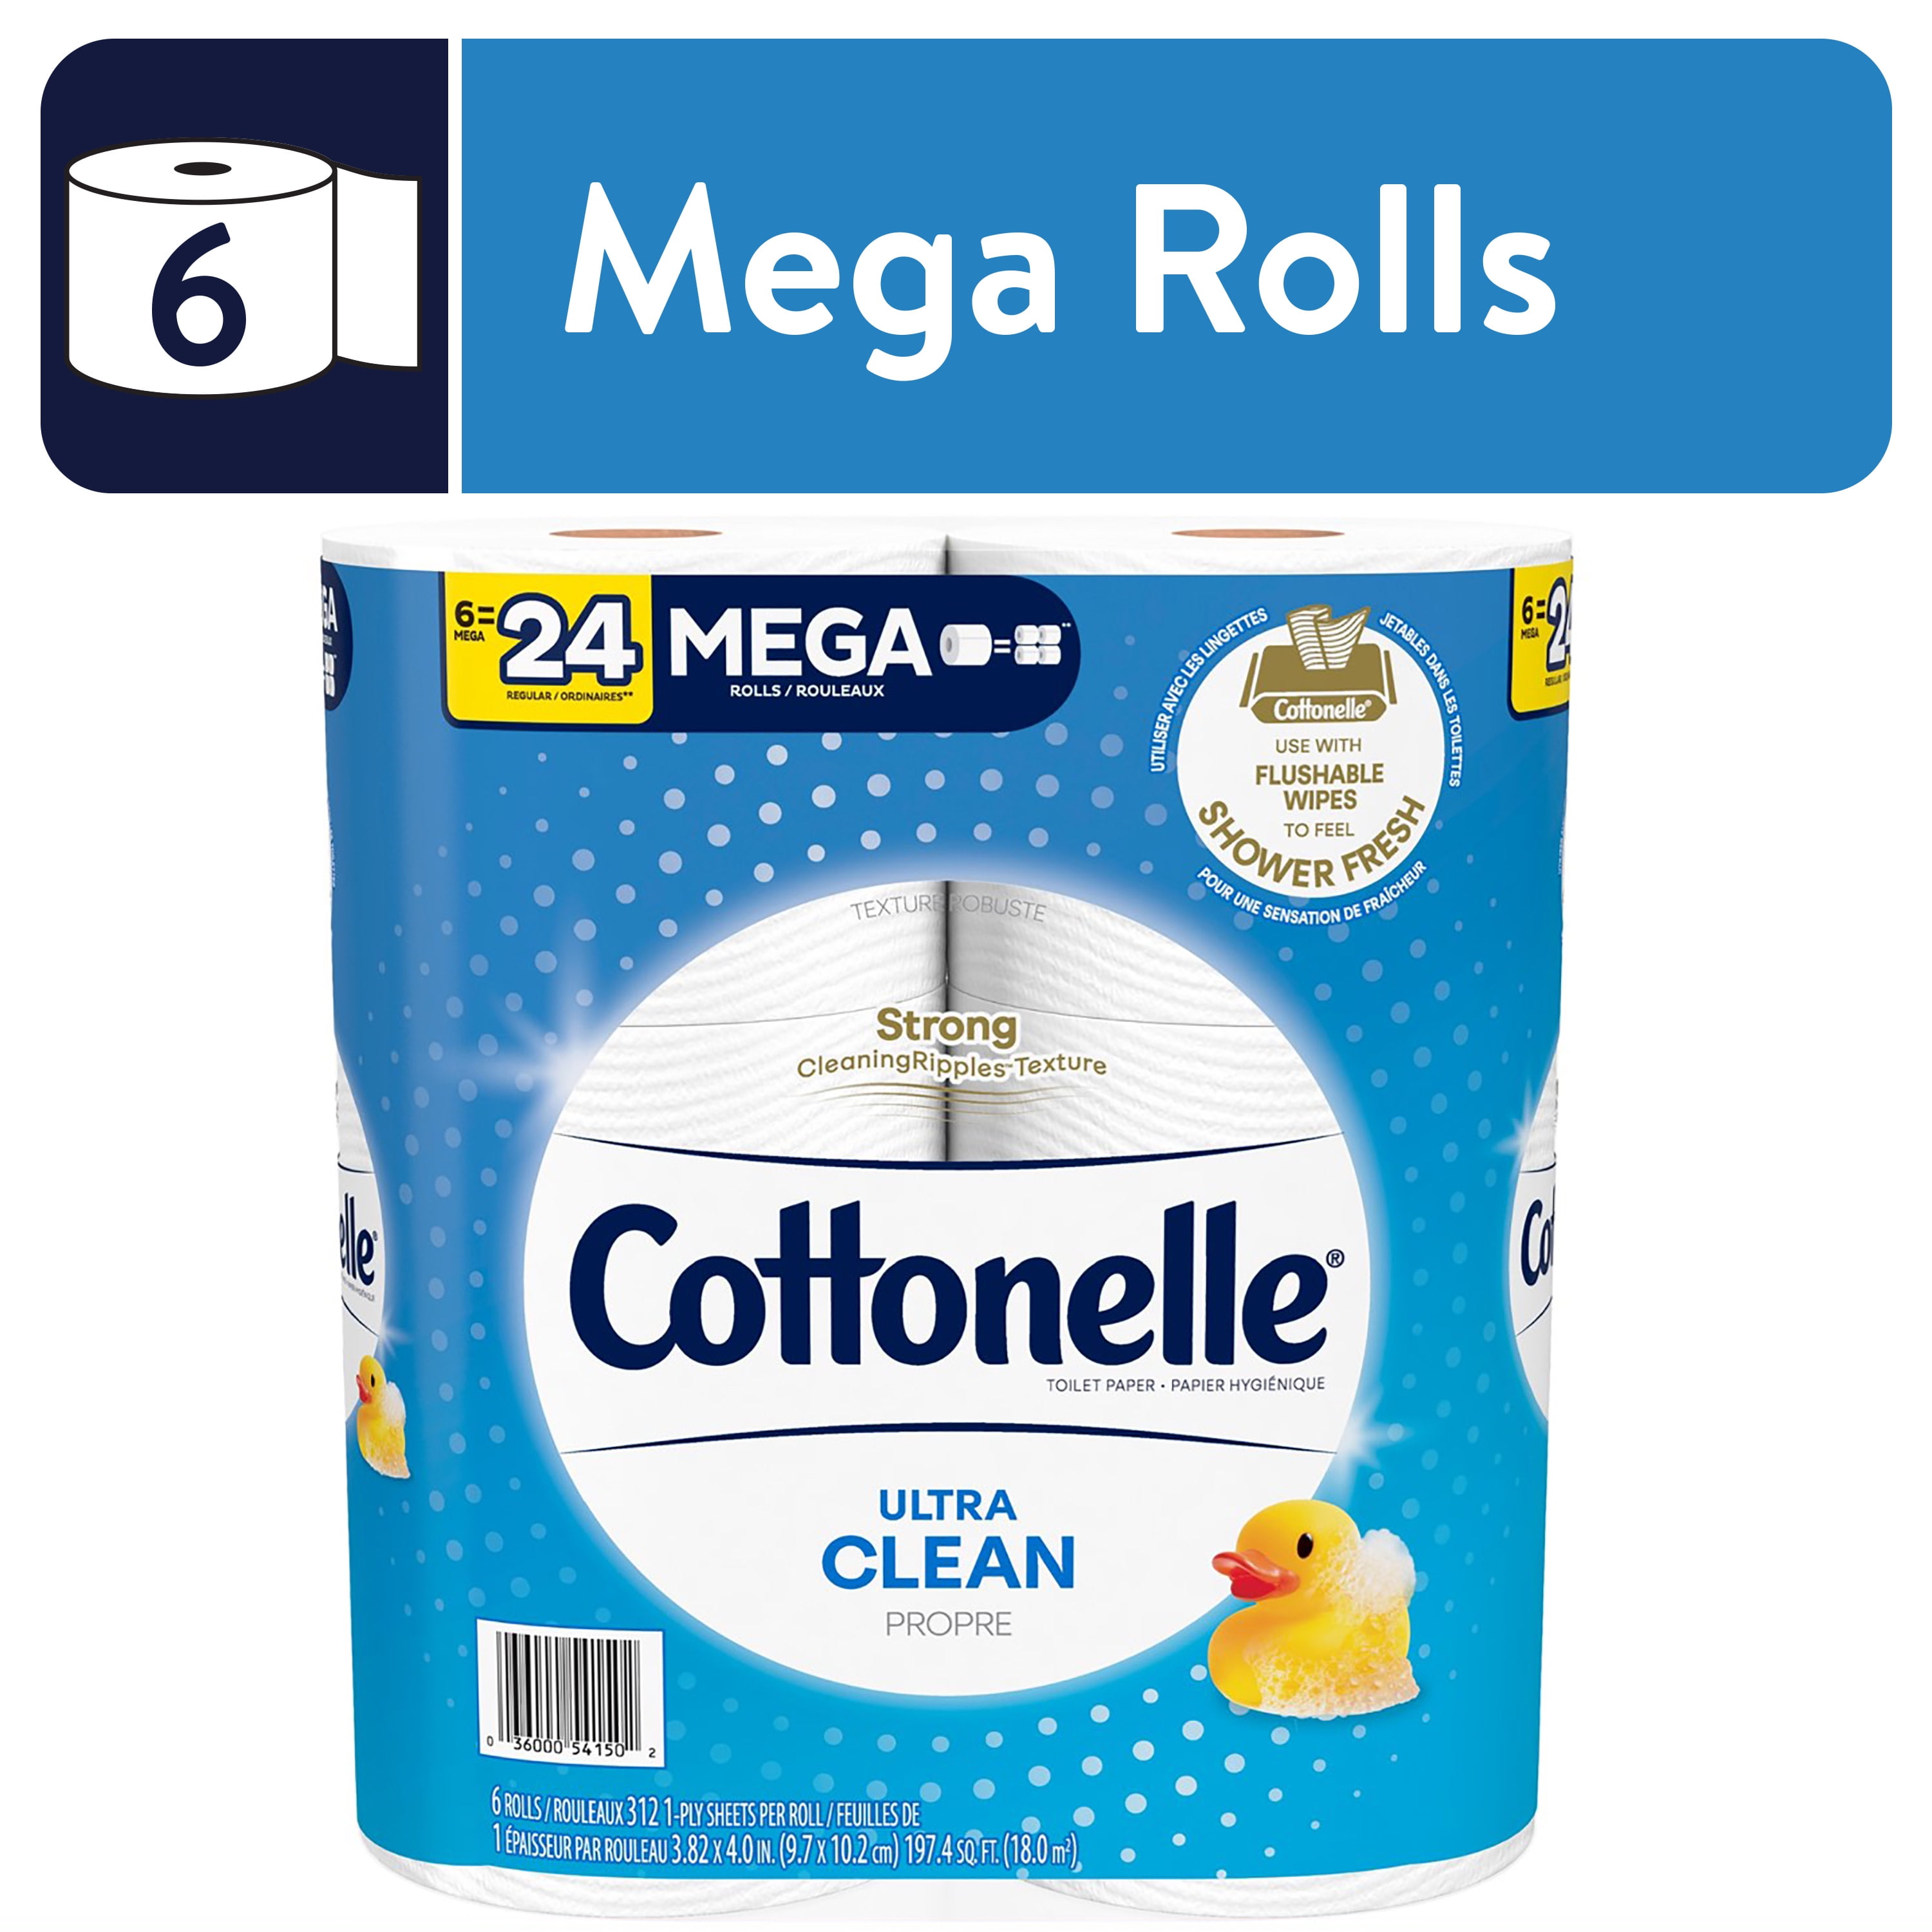 Cottonelle Ultra Clean Toilet Paper, 6 Mega Rolls - Walmart.com